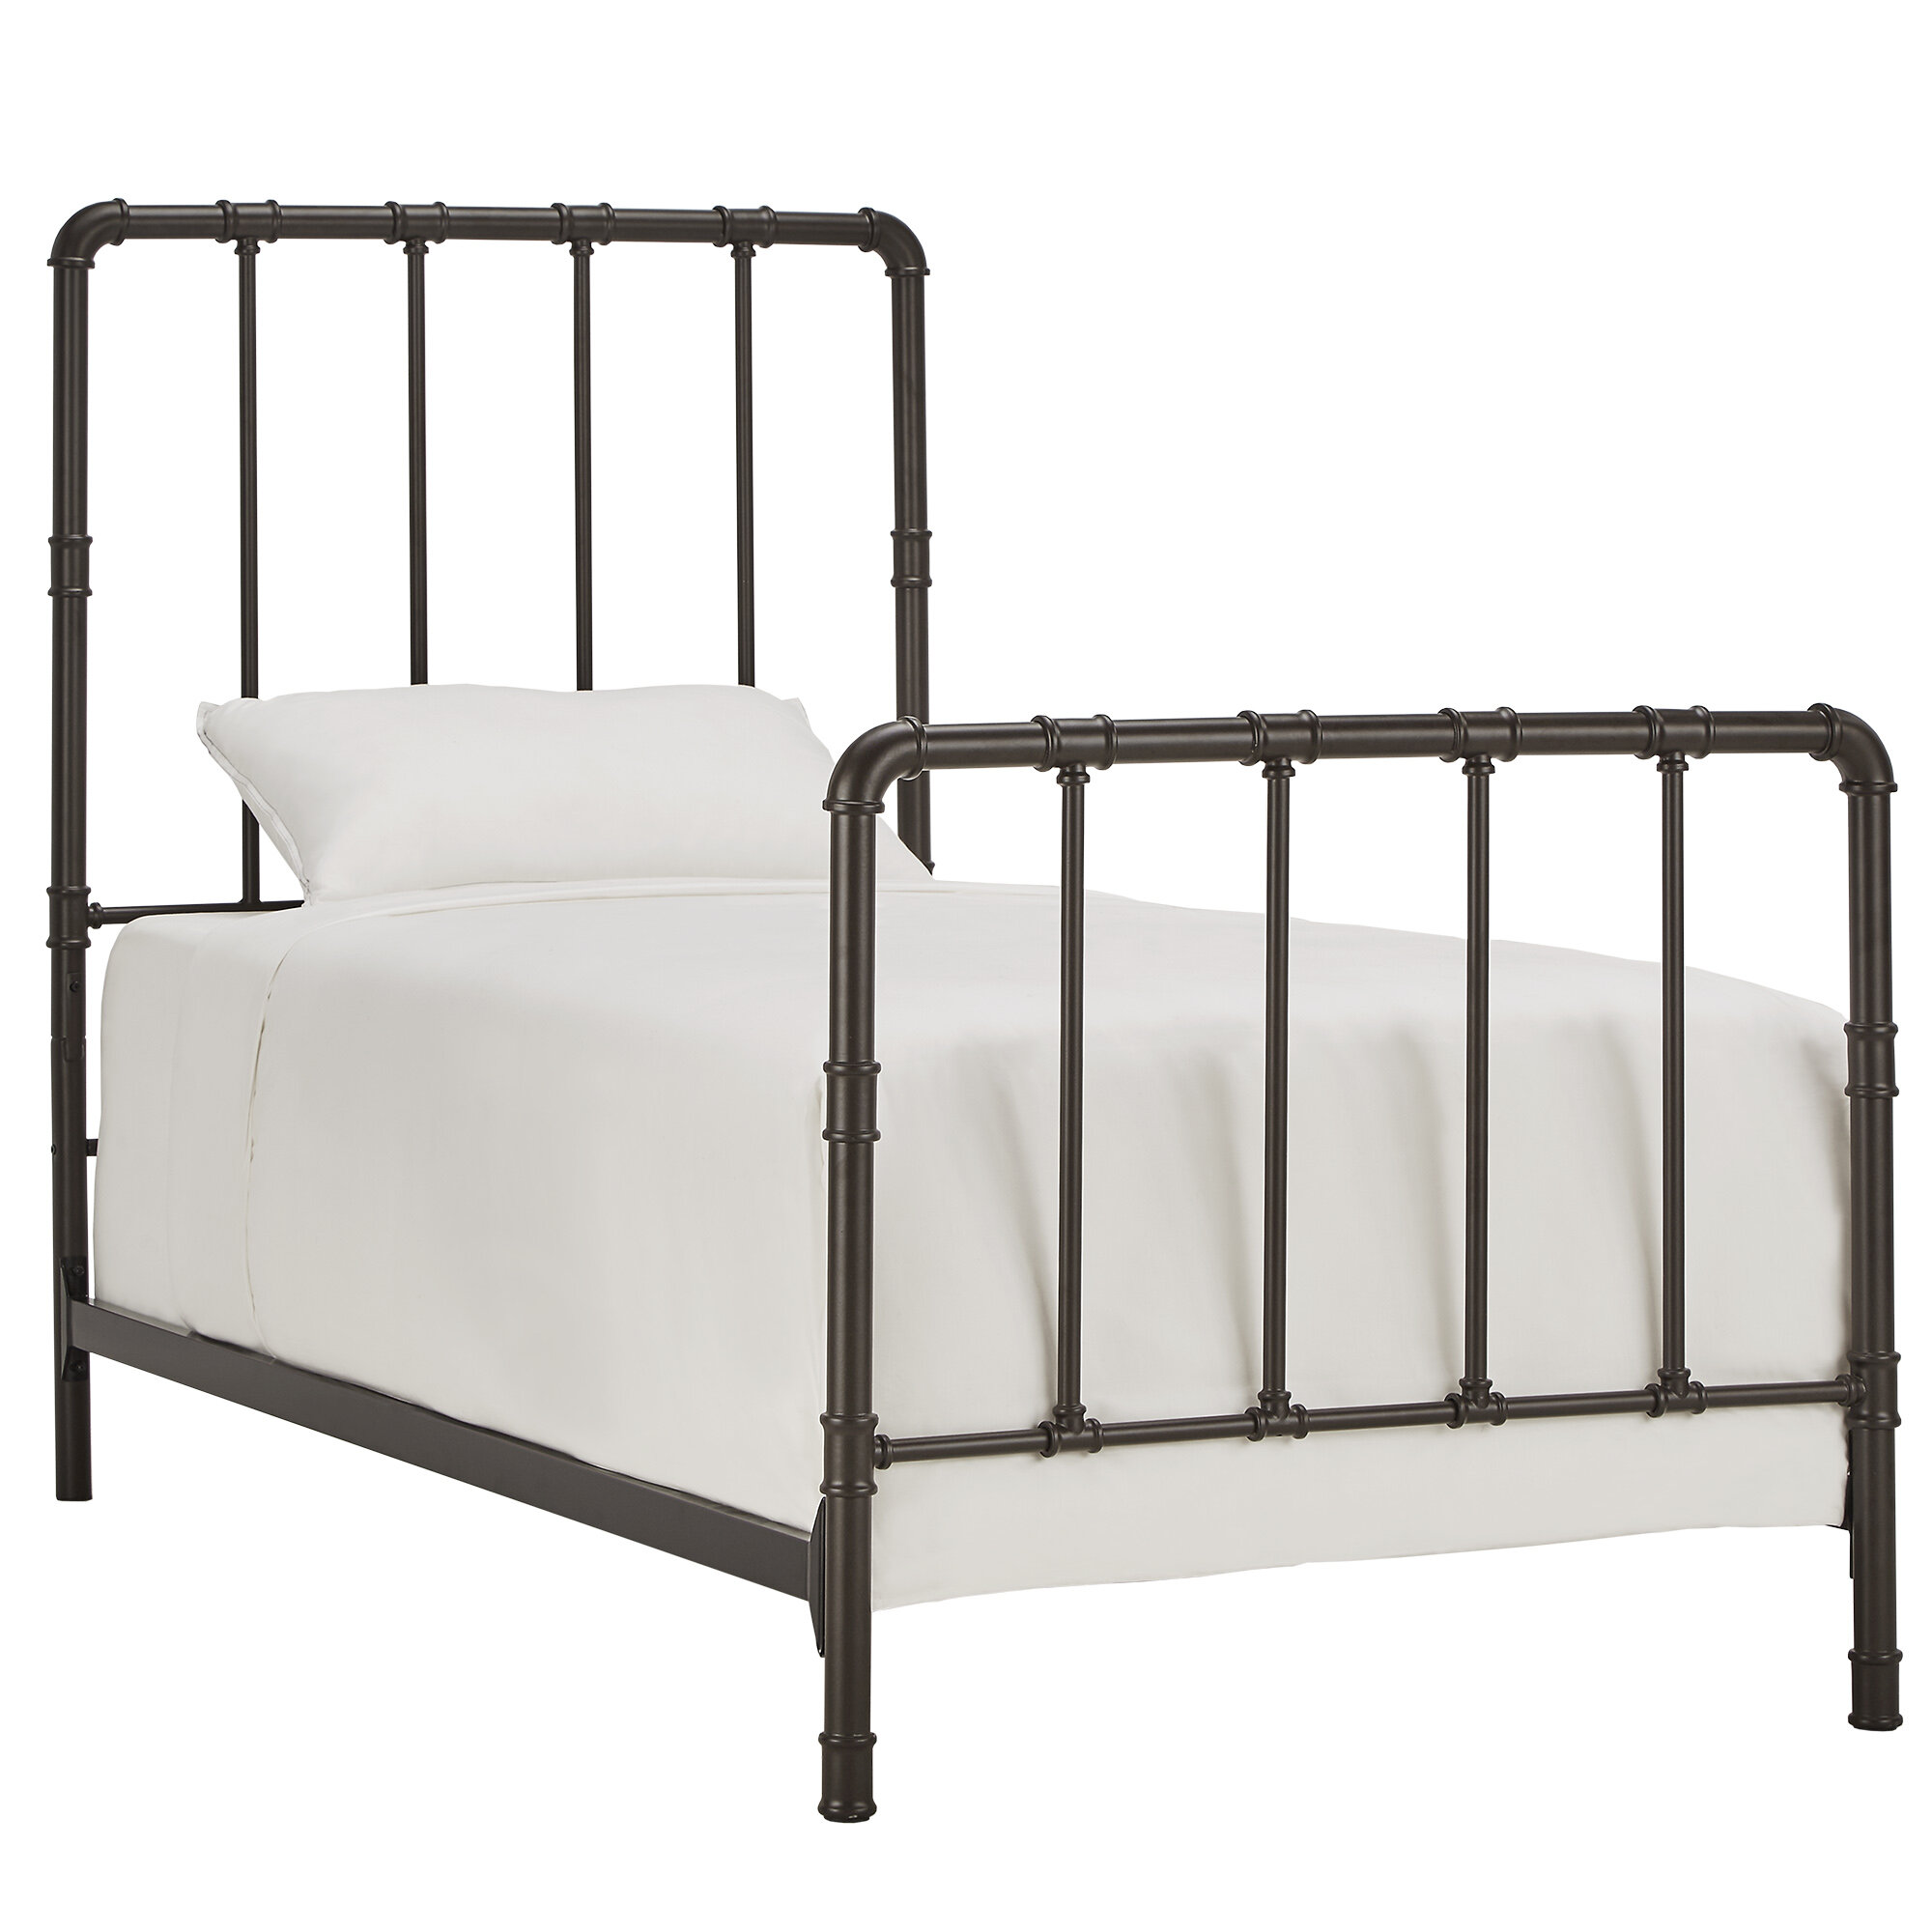 Trent Austin Design South San Francisco Standard Bed Reviews